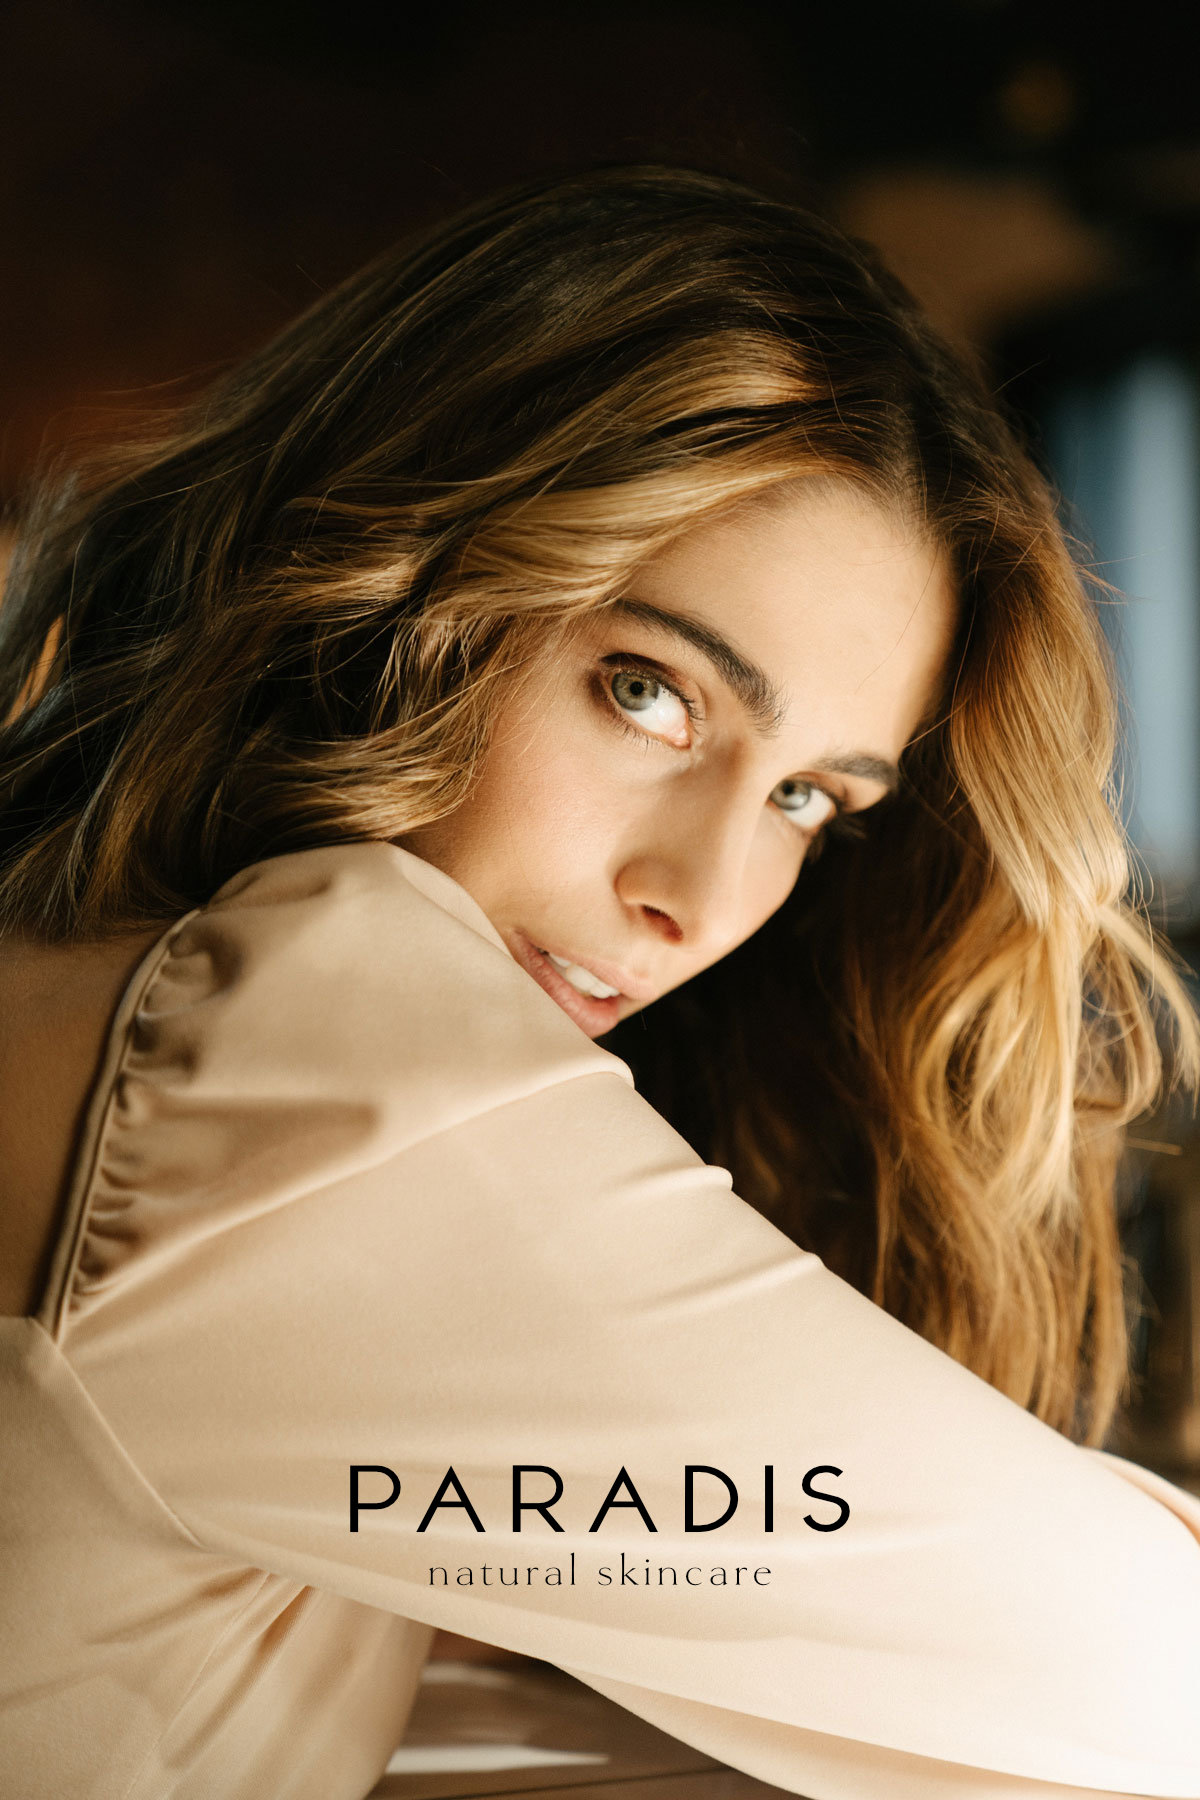 French Paradis girl